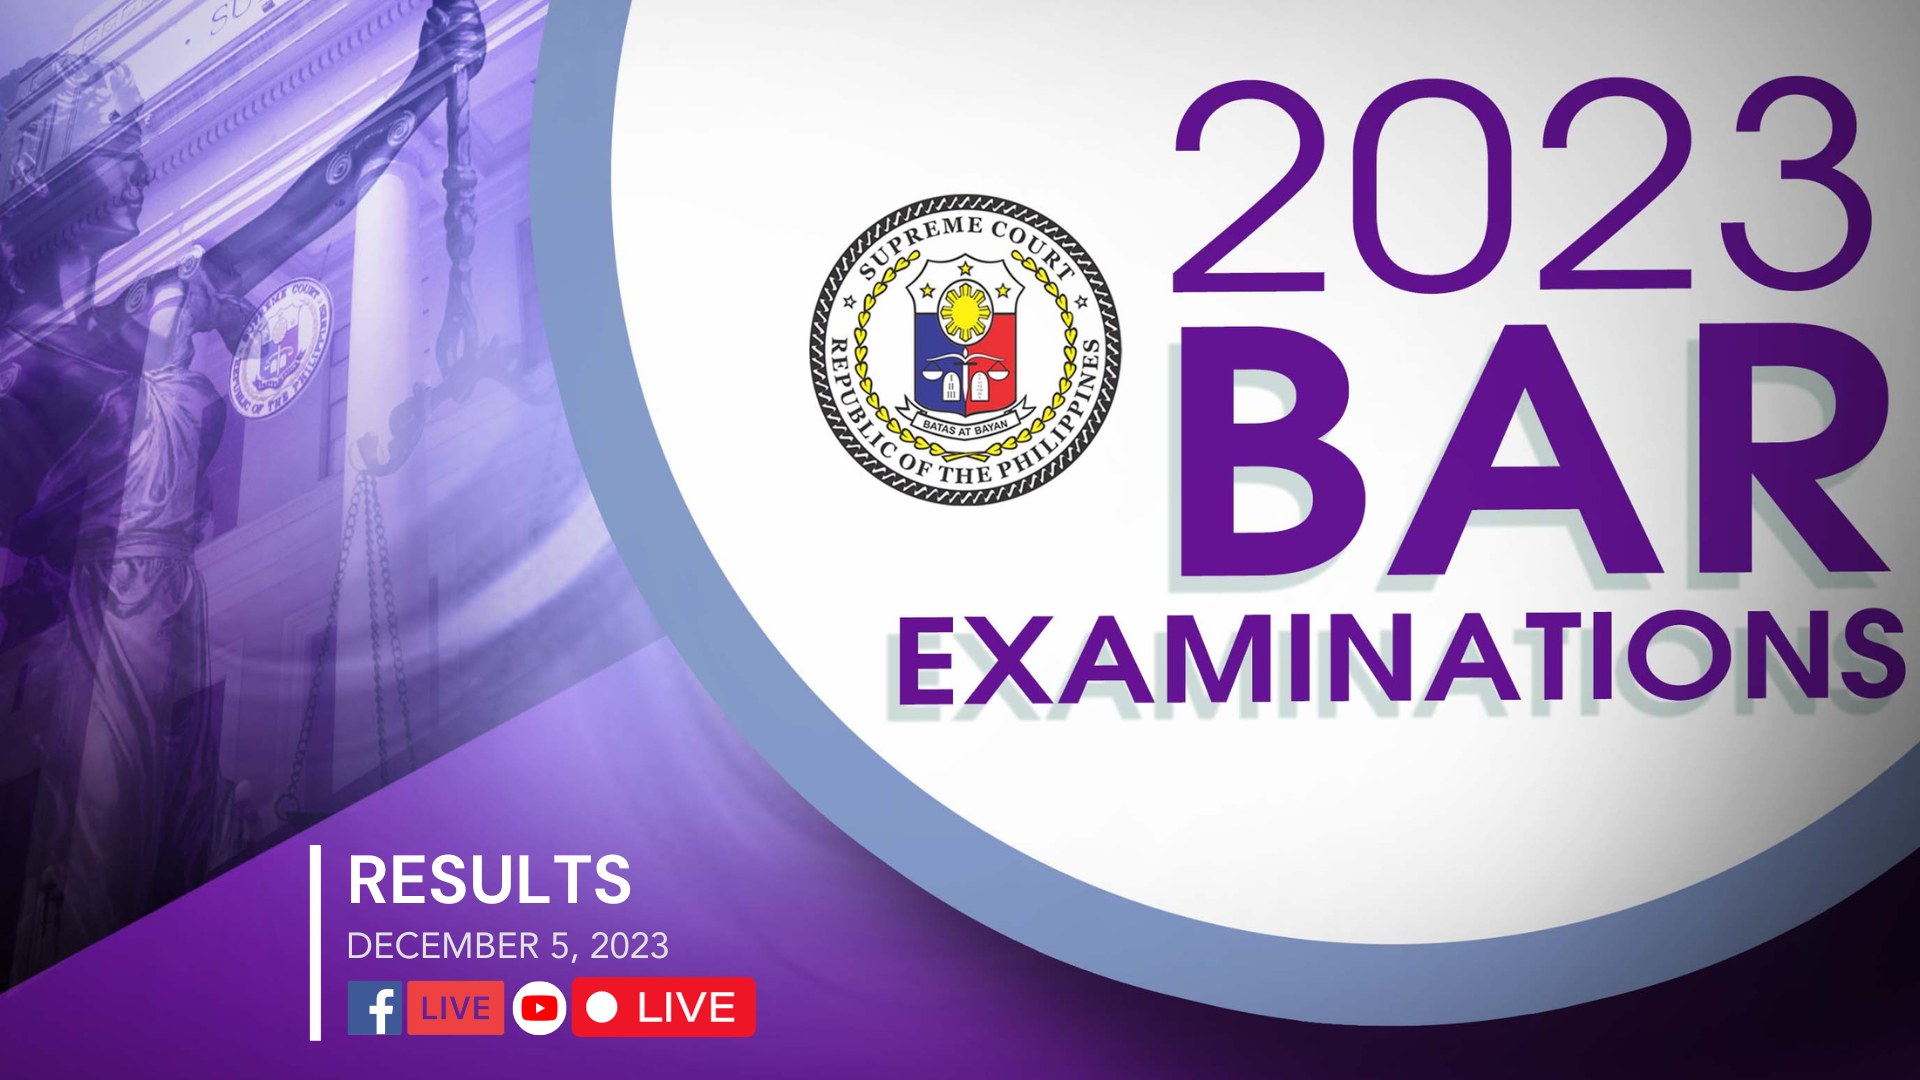 Bar Exam Results 2023